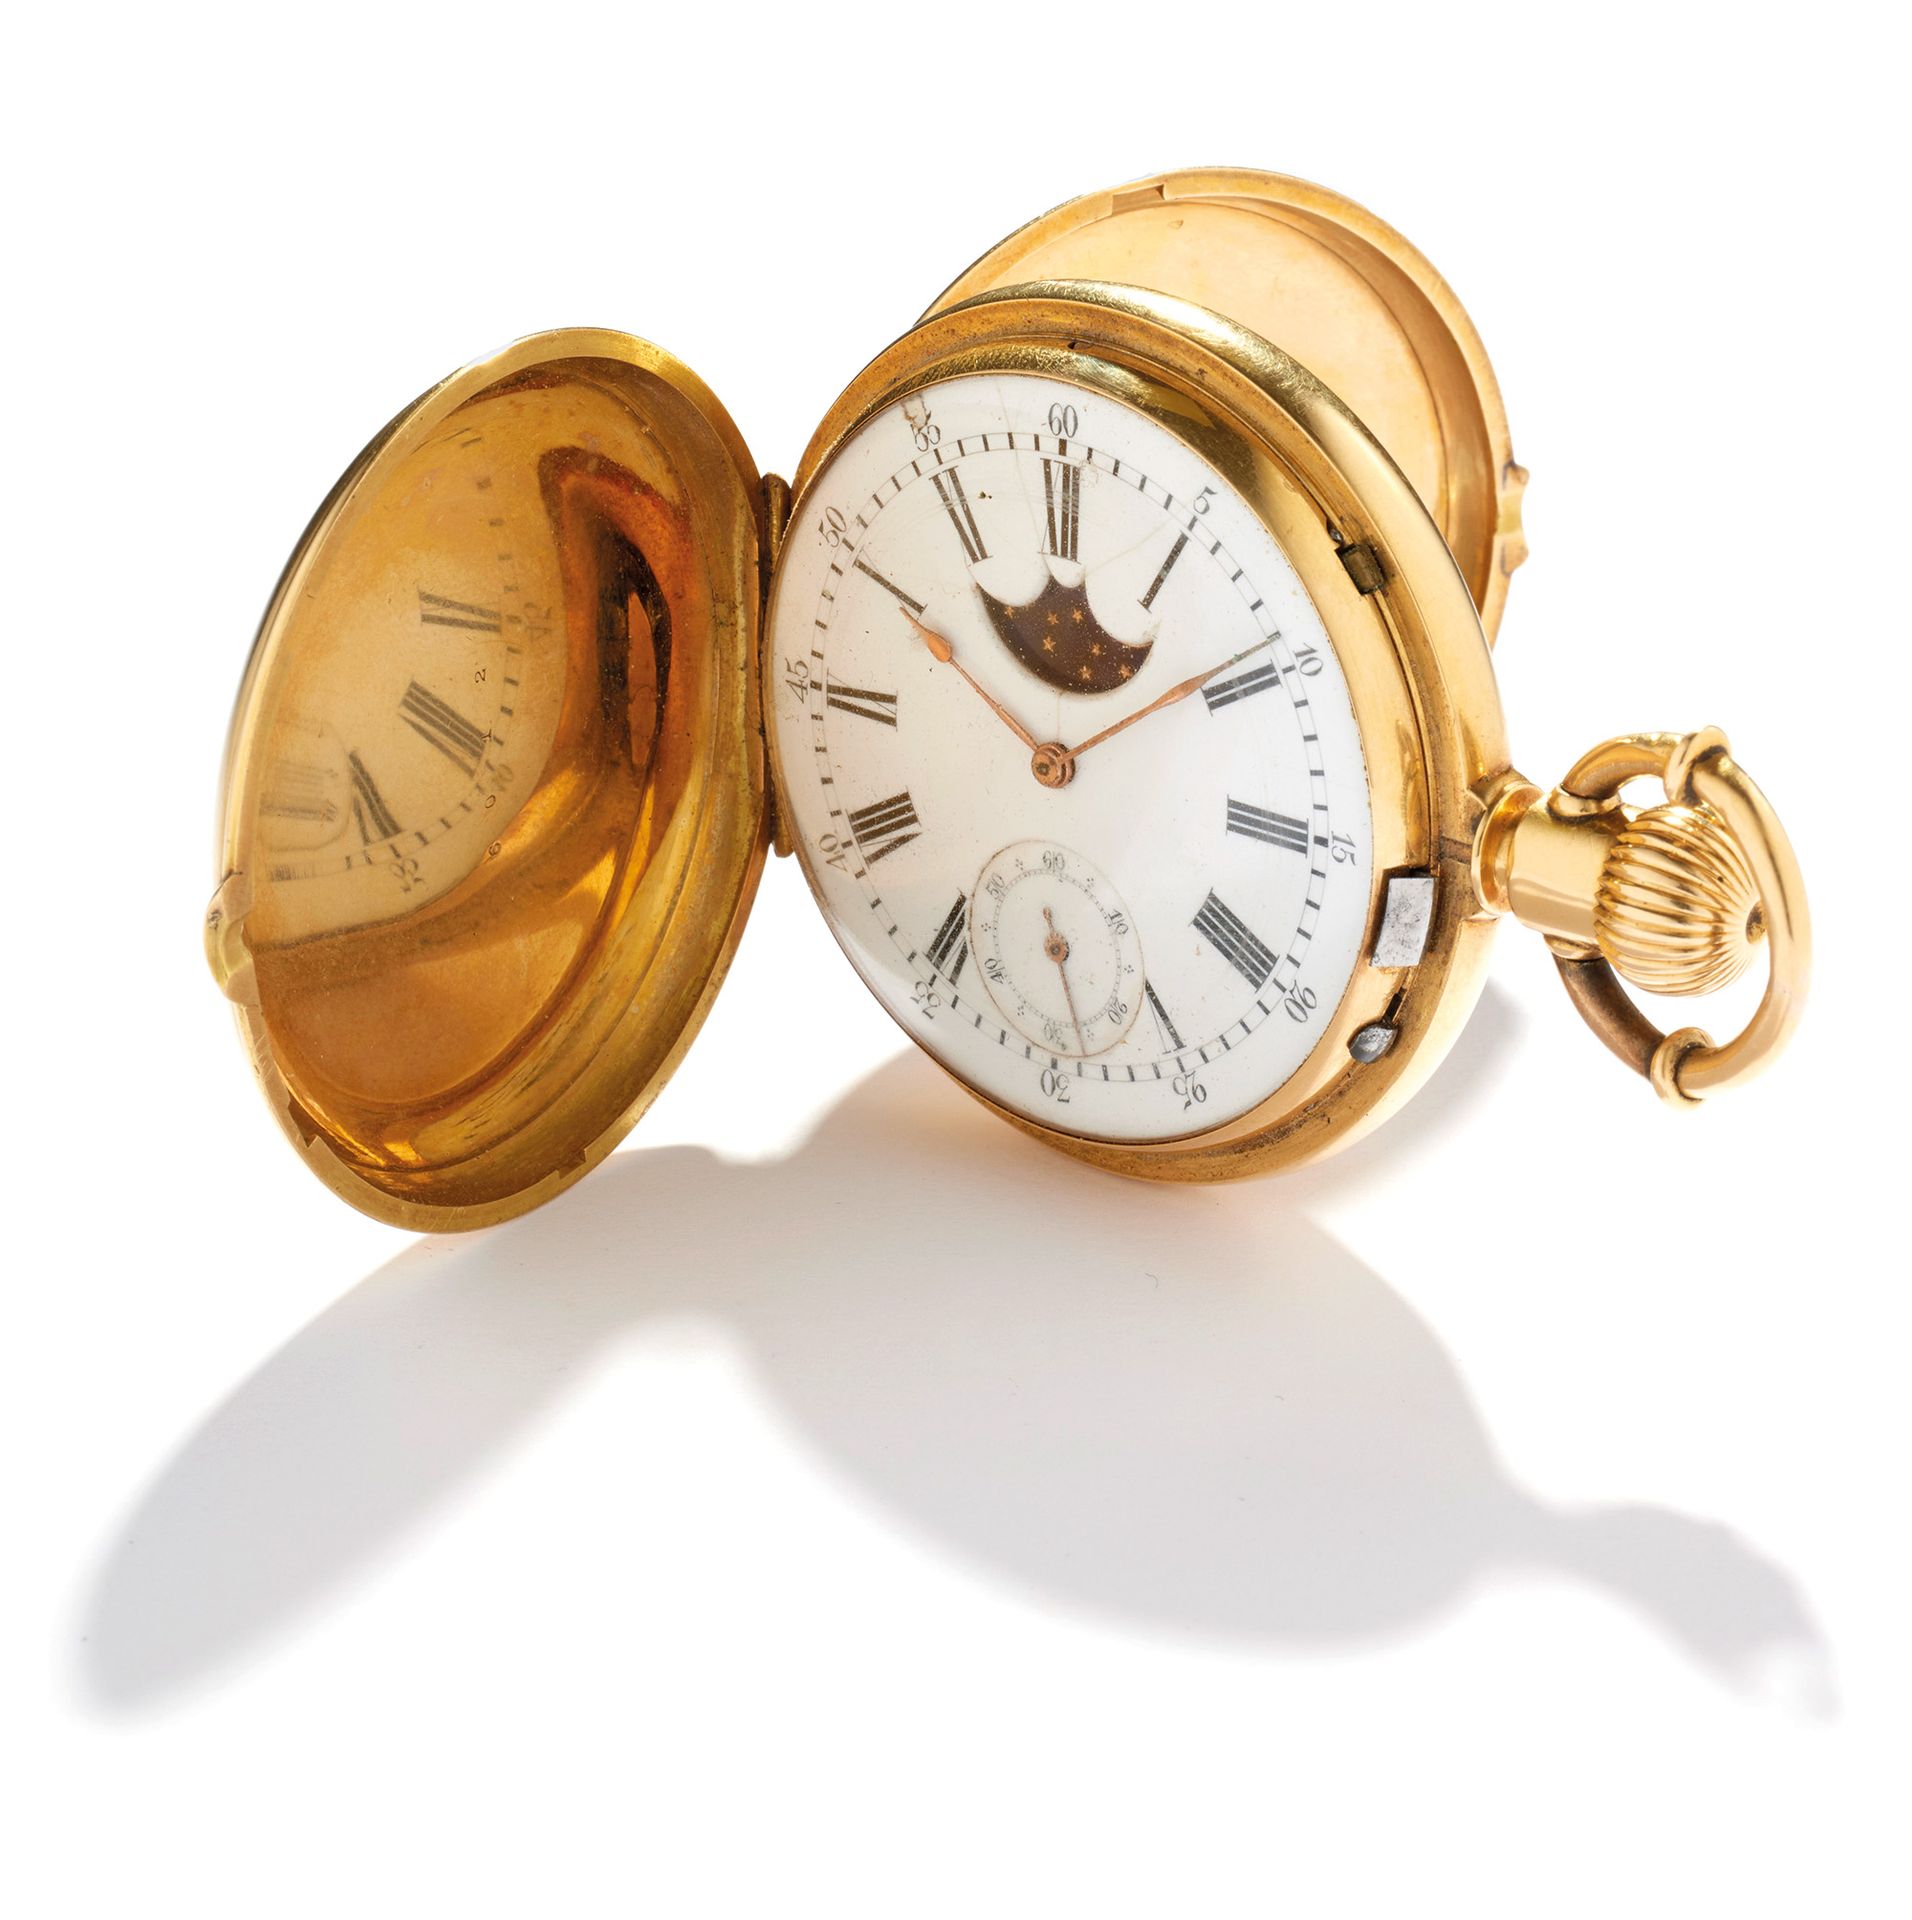 ANONYME Vers 1900 ANÓNIMO Hacia 1900
N° 6012-18518
Reloj de bolsillo de doble ca&hellip;